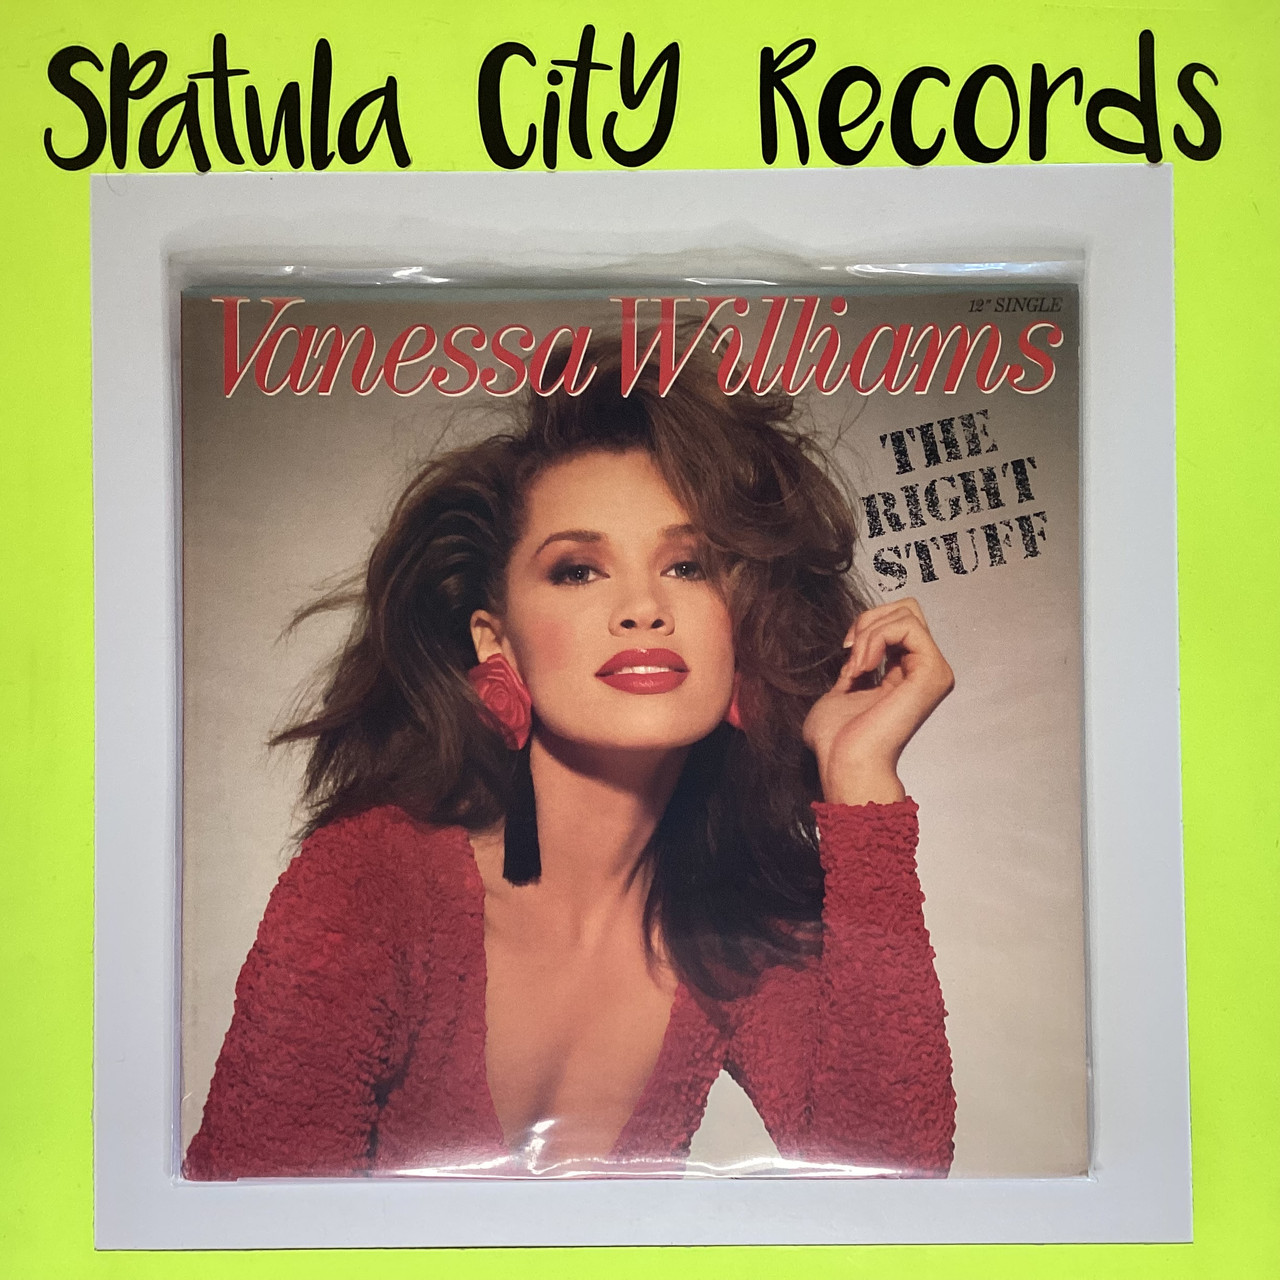 Vanessa Williams - The Right Stuff - 12" single - vinyl record LP